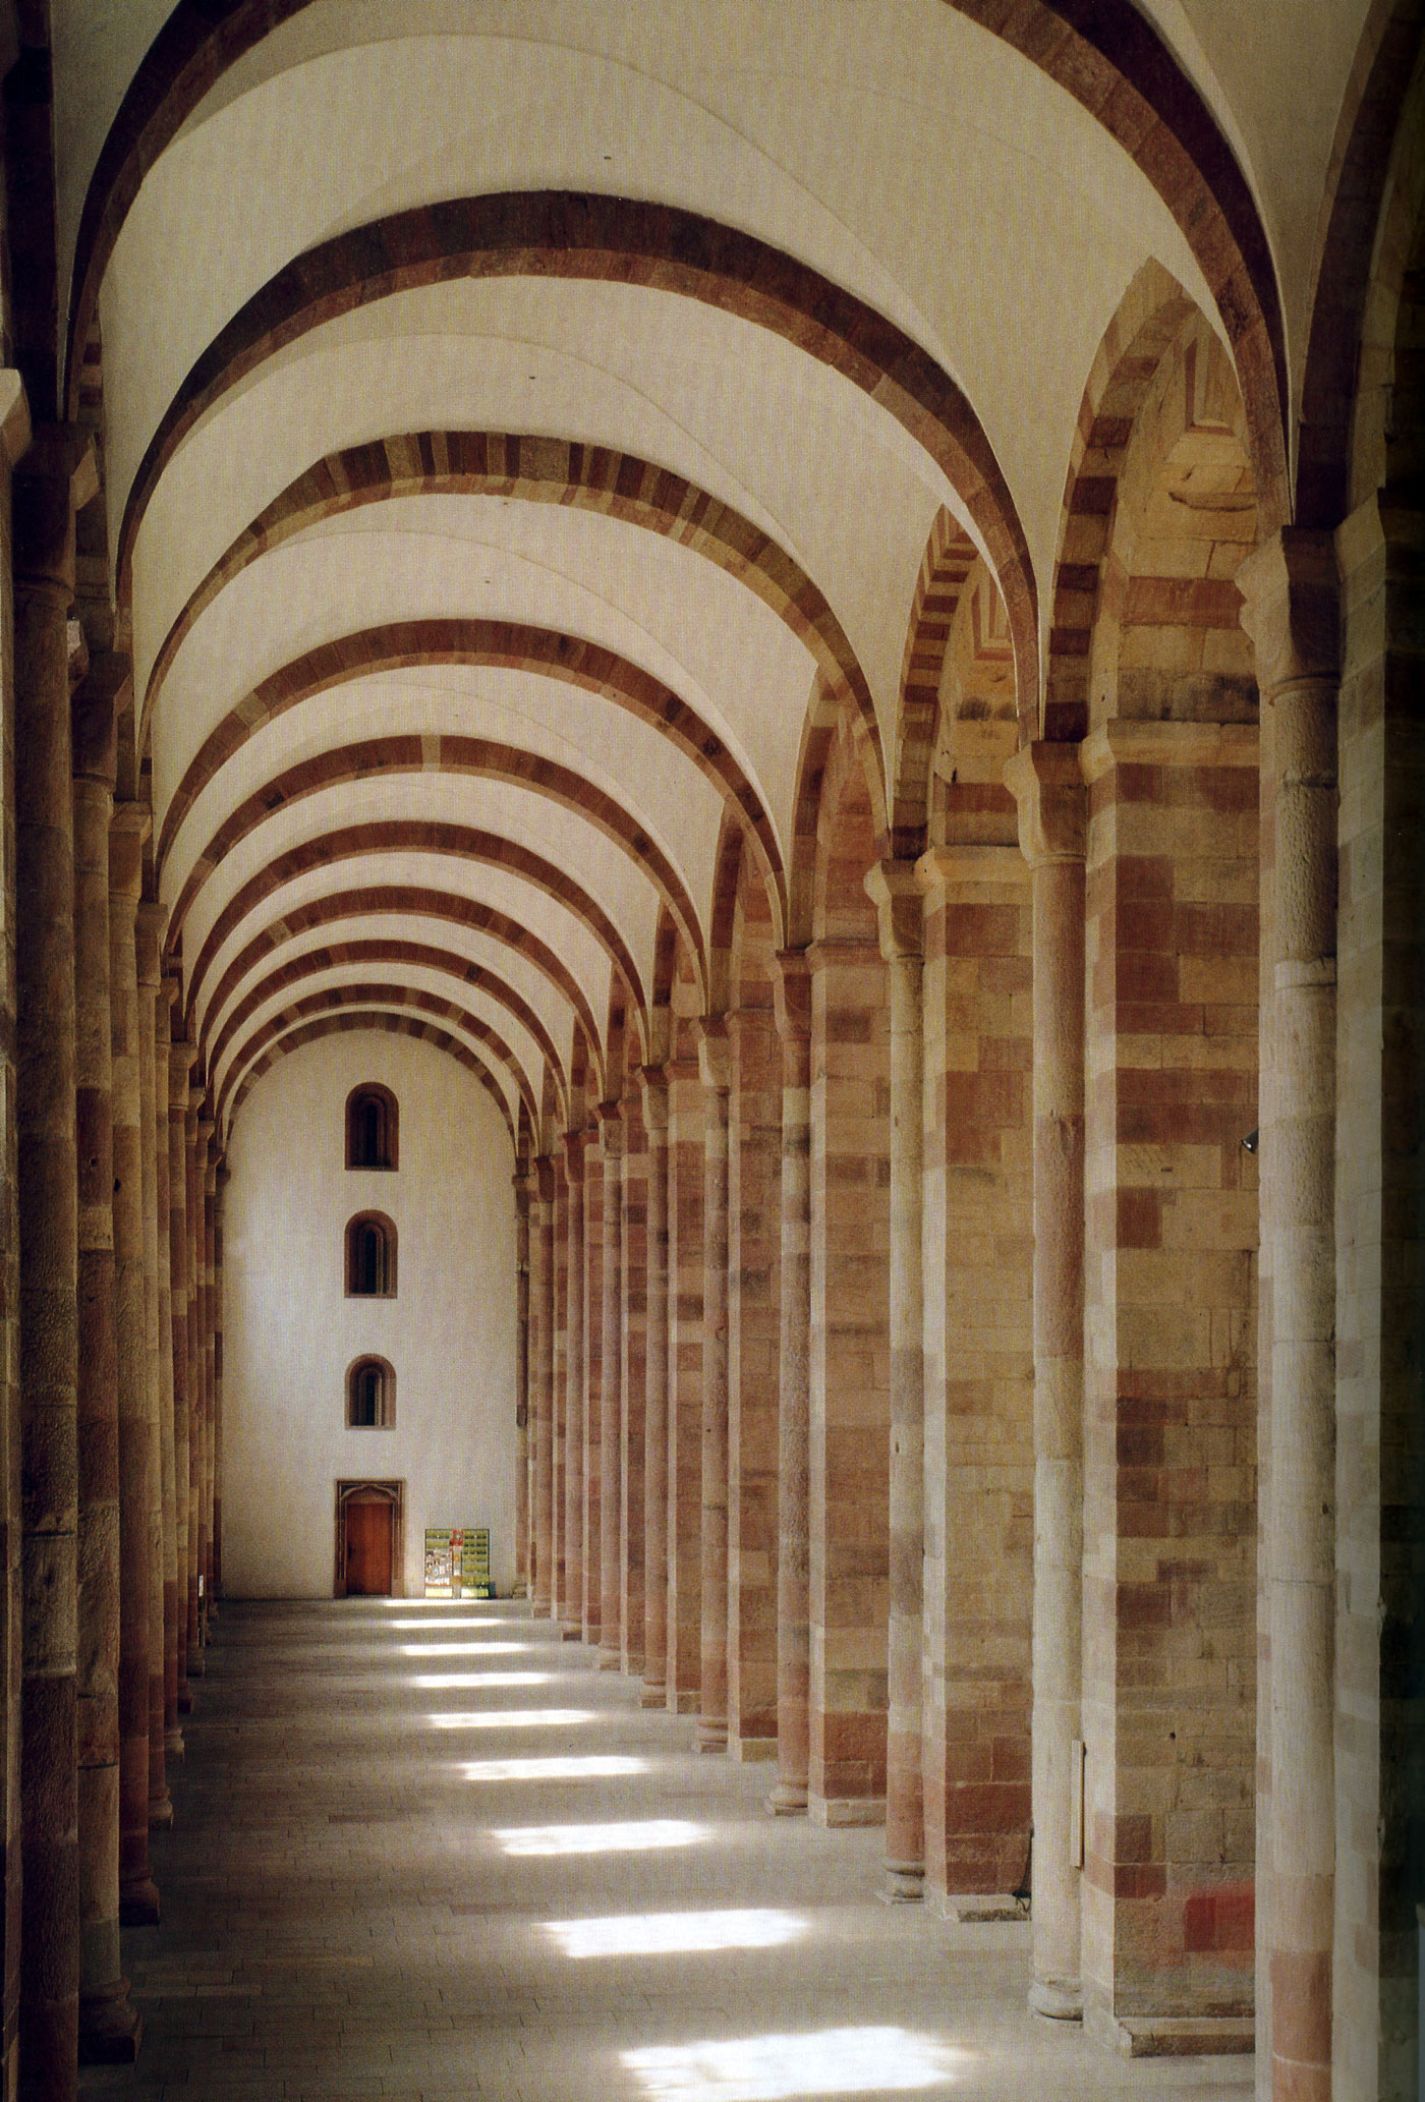 Spira, Duomo, nave lateral sur, siglo XII